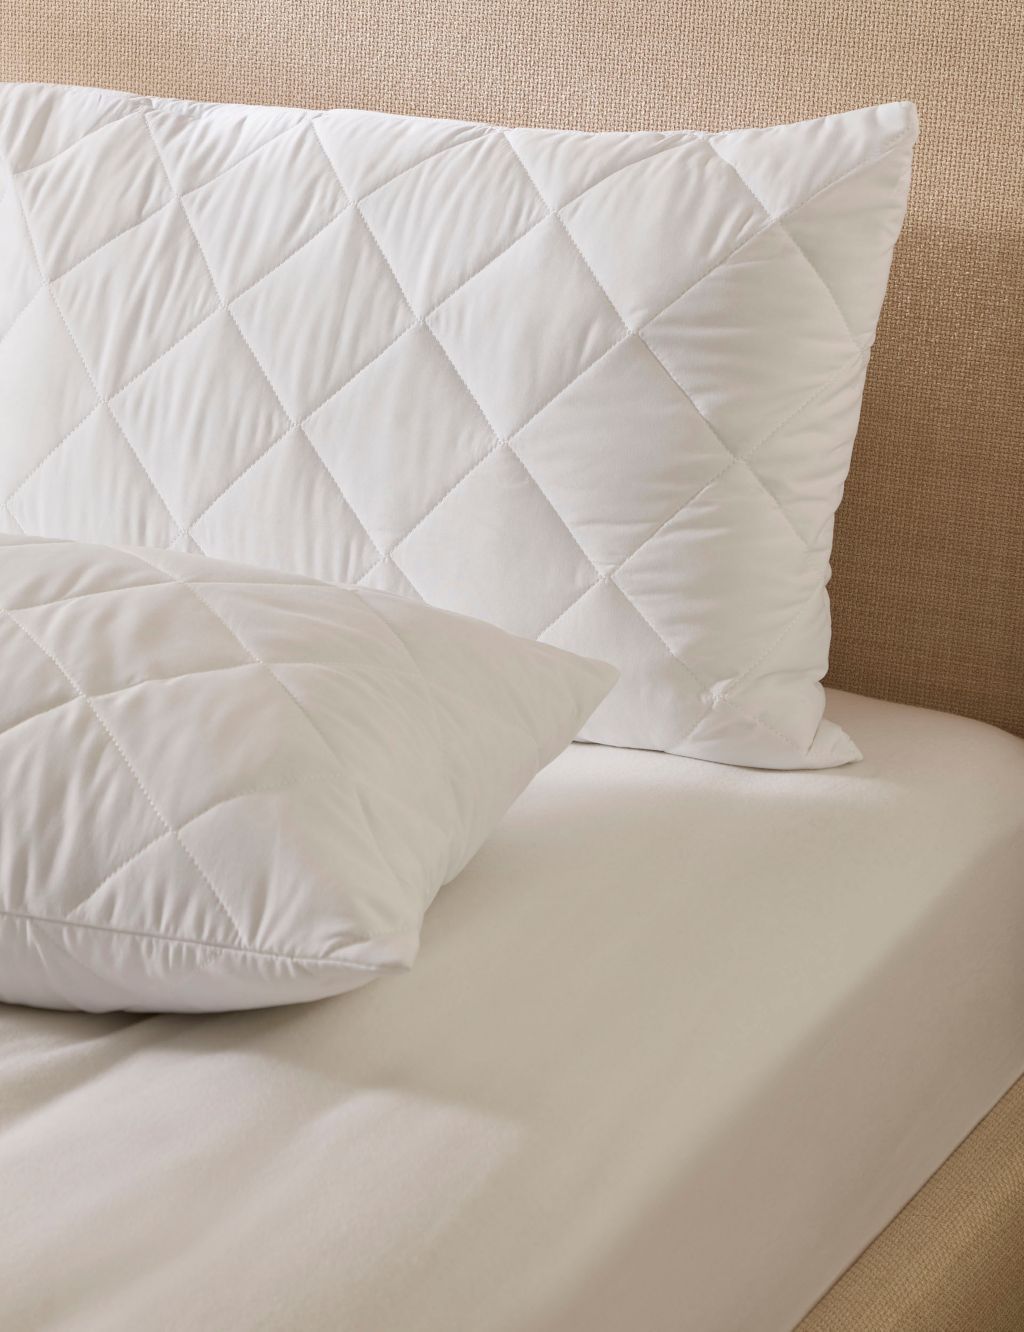 2pk Simply Protect Pillow Protectors